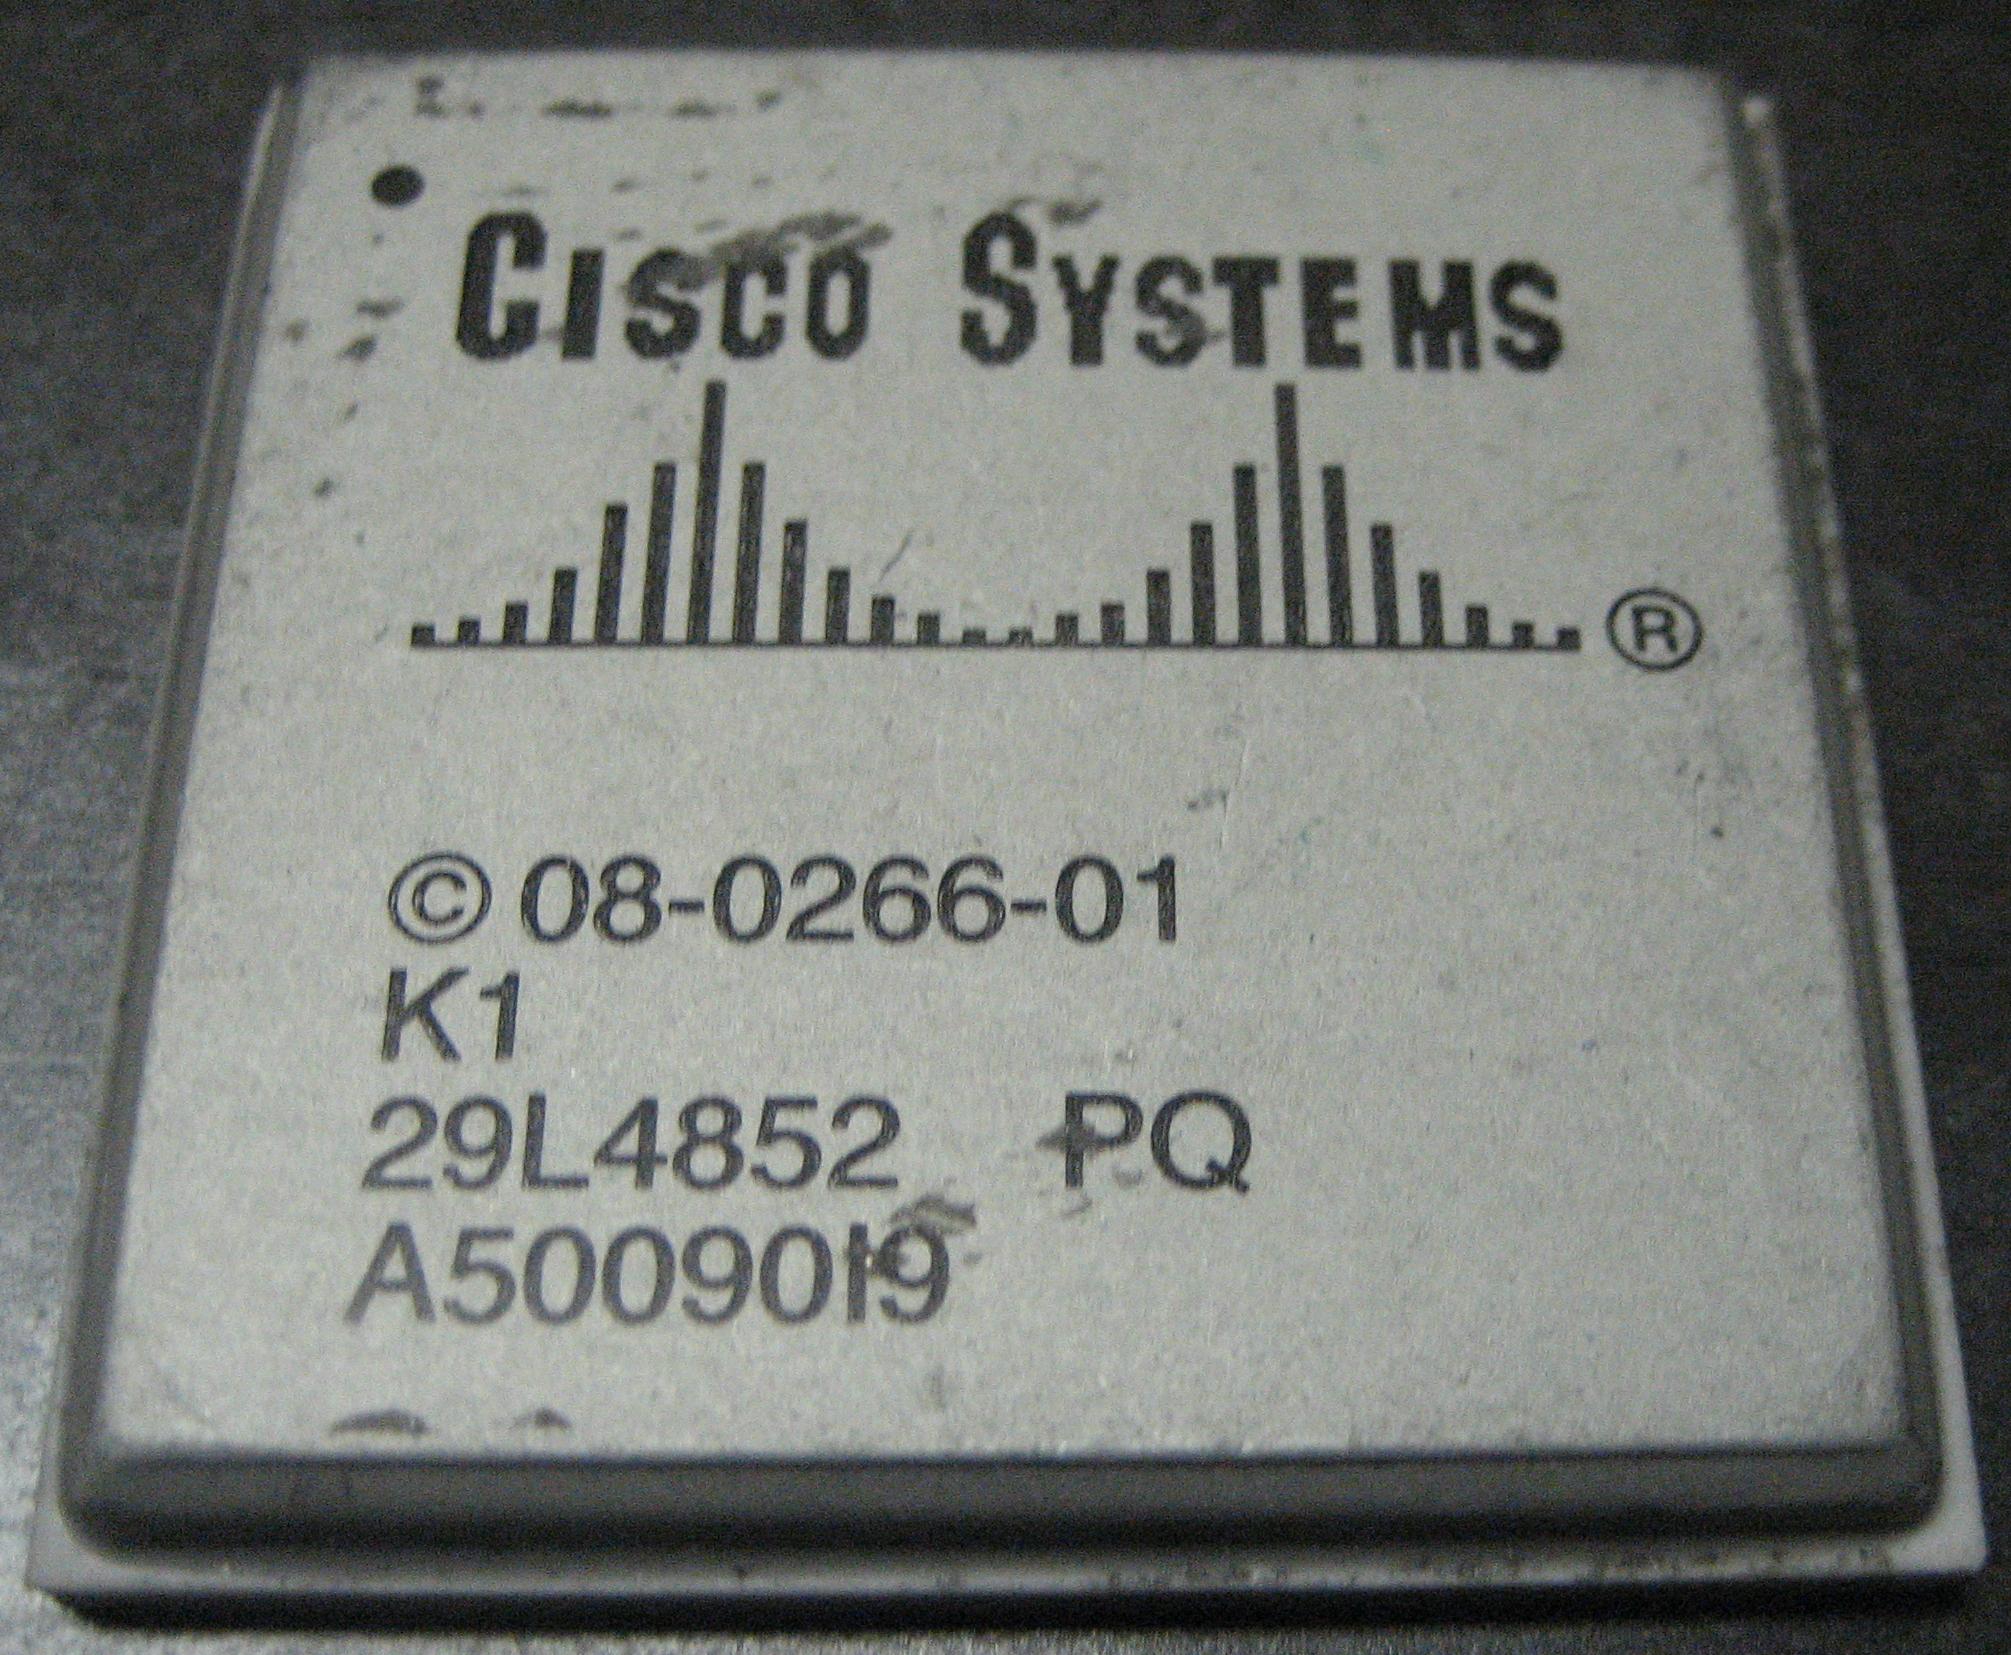 cisco_systems_08-0266-01.jpg